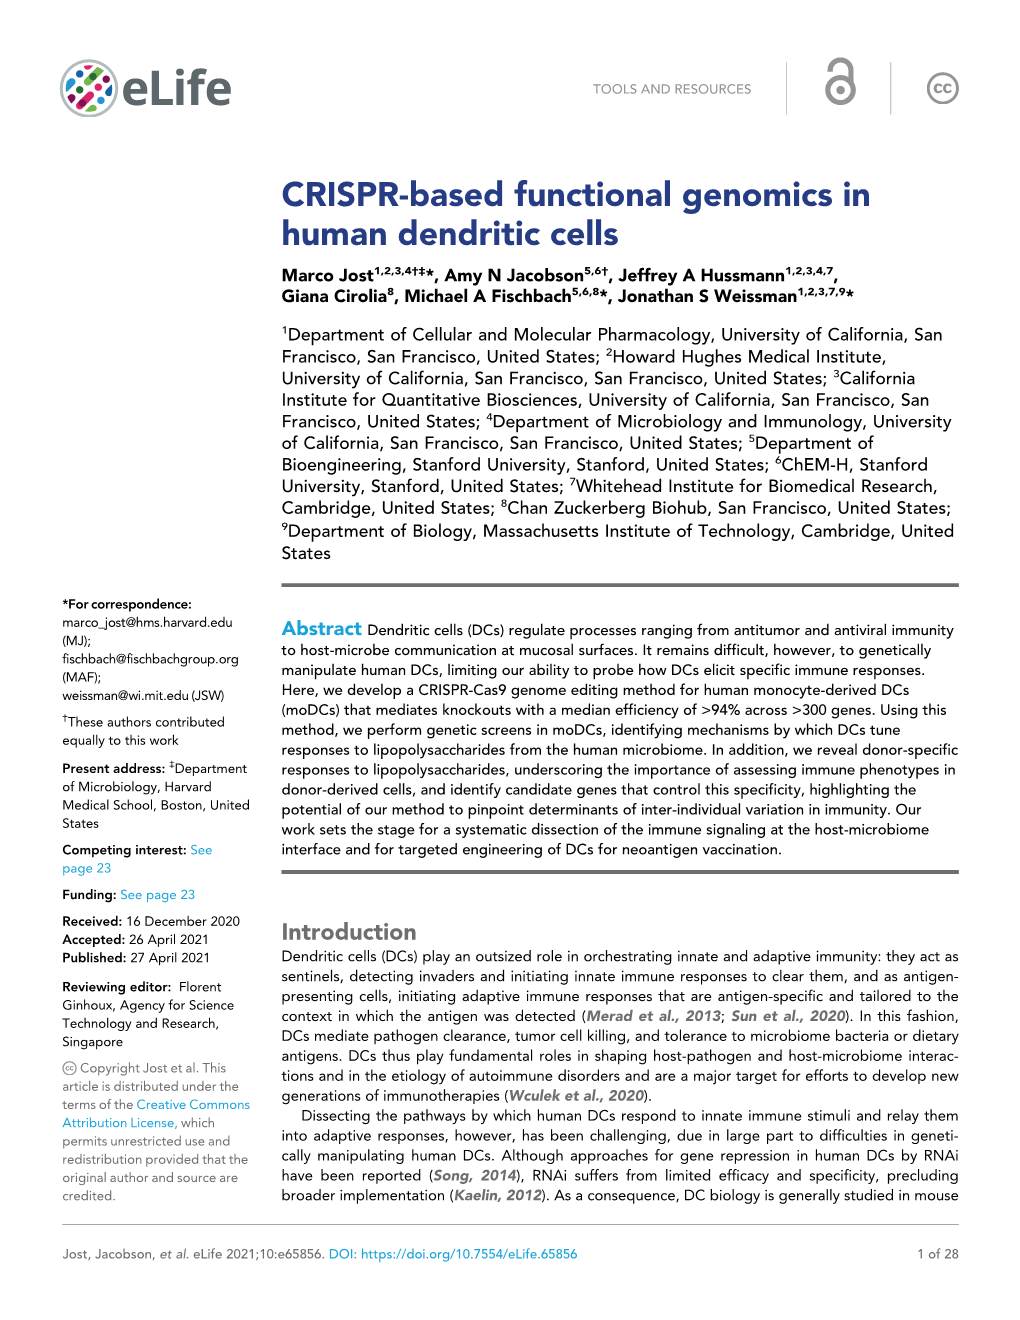 CRISPR-Based Functional Genomics in Human Dendritic Cells